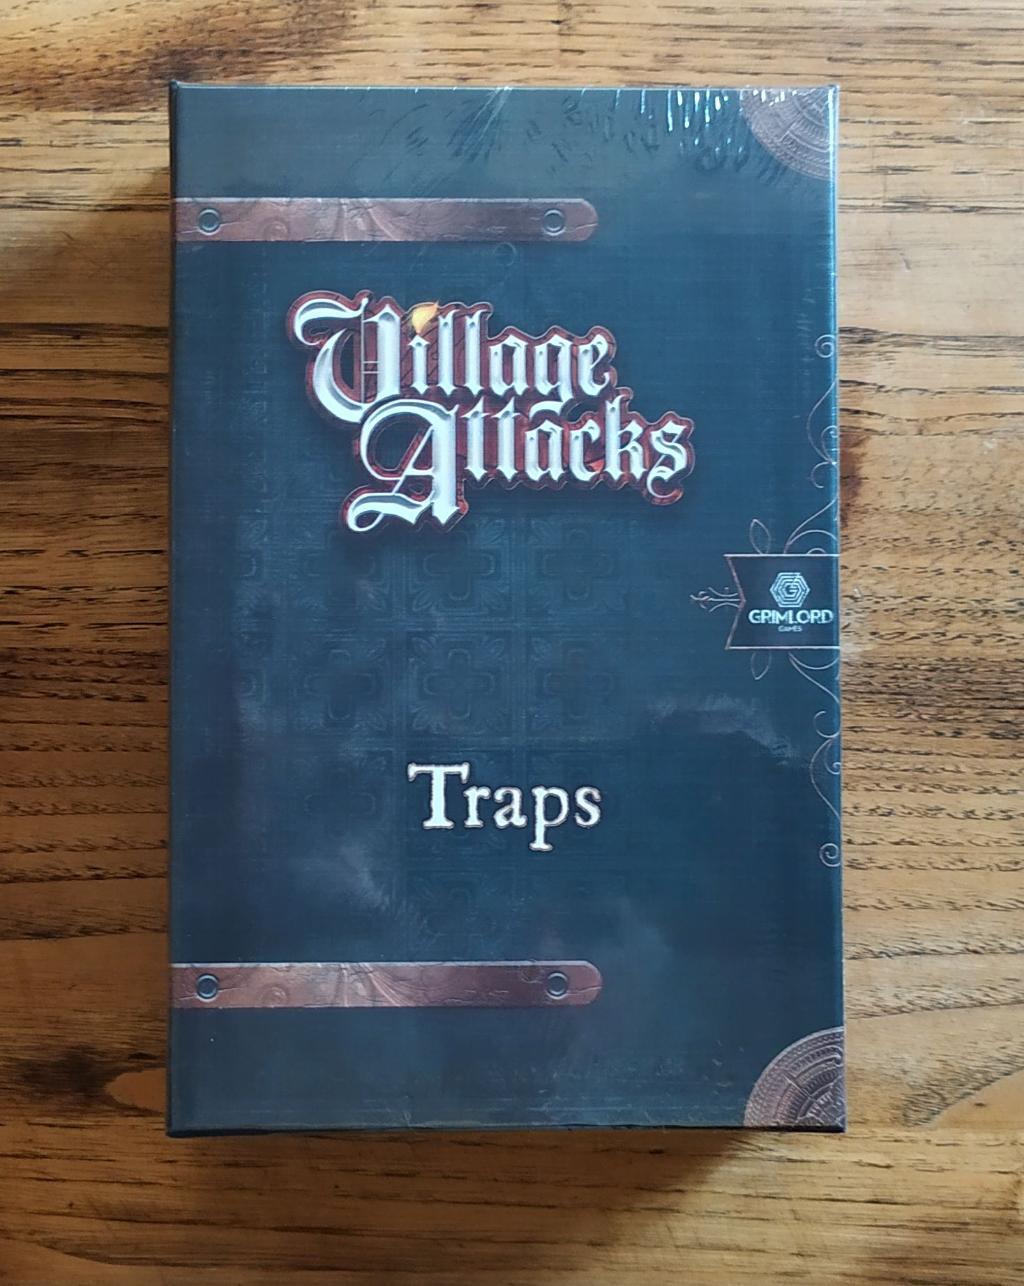 Village Attacks - Traps